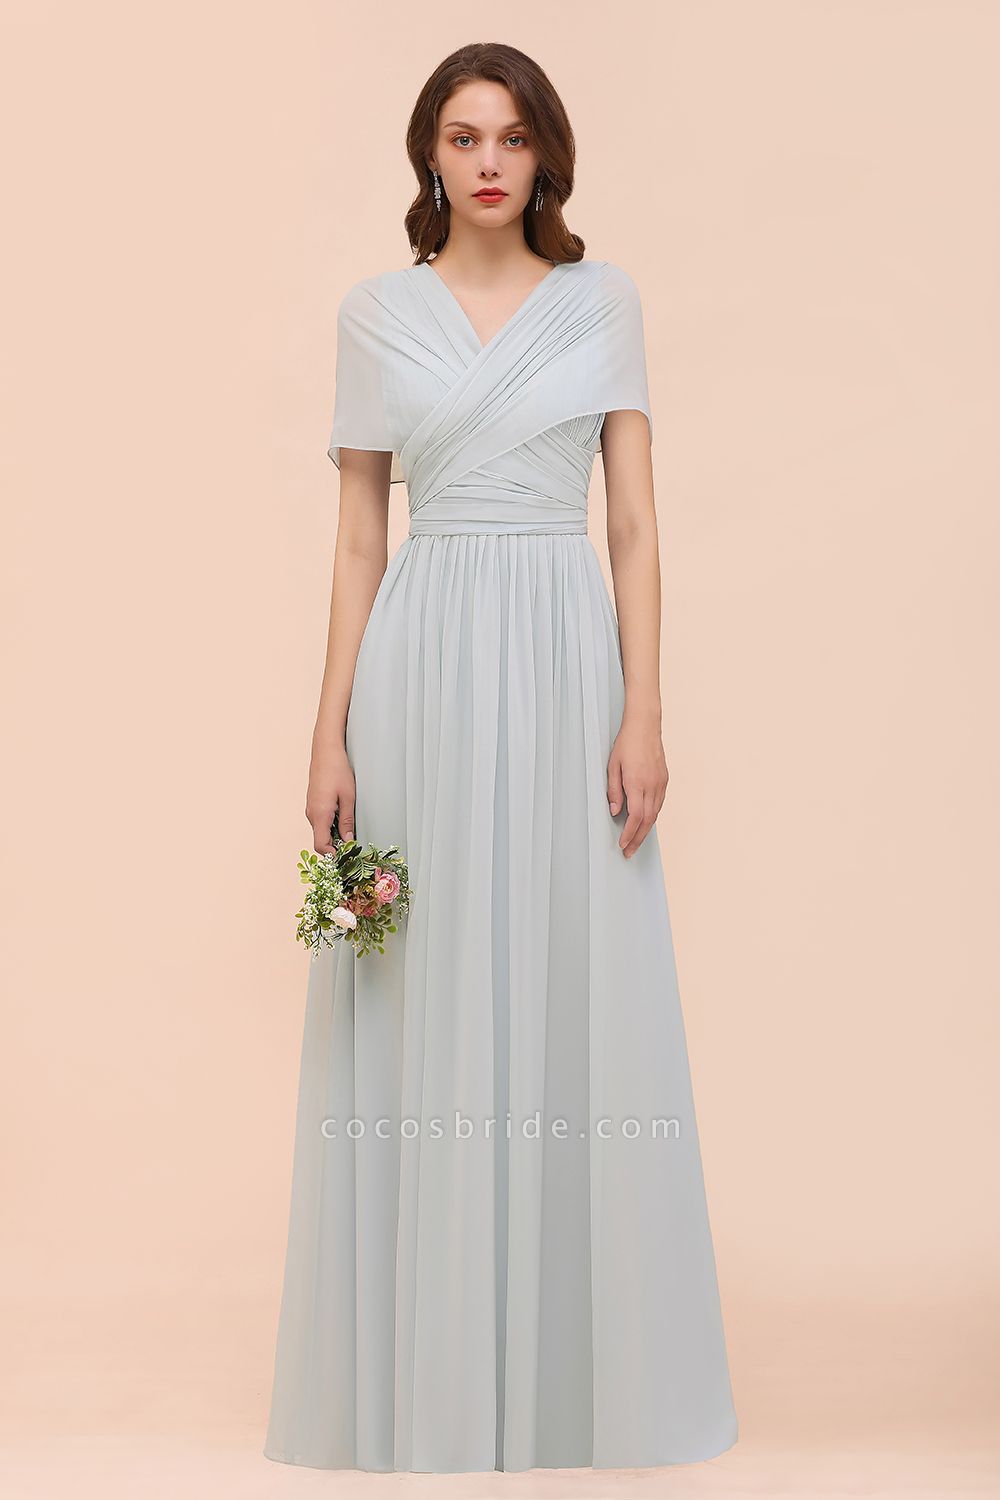 Infinity Soft Chiffon A-Line Wedding Guest Dress Floor Length Bridesmaid Dress